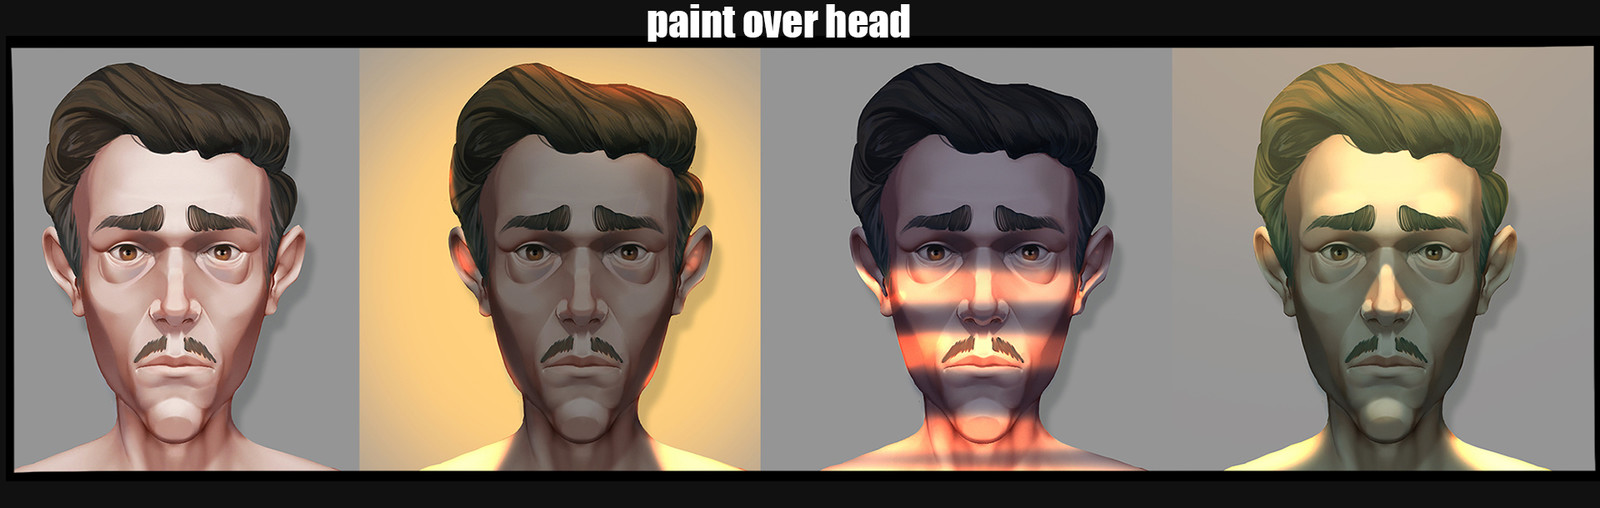 paintover 3D head